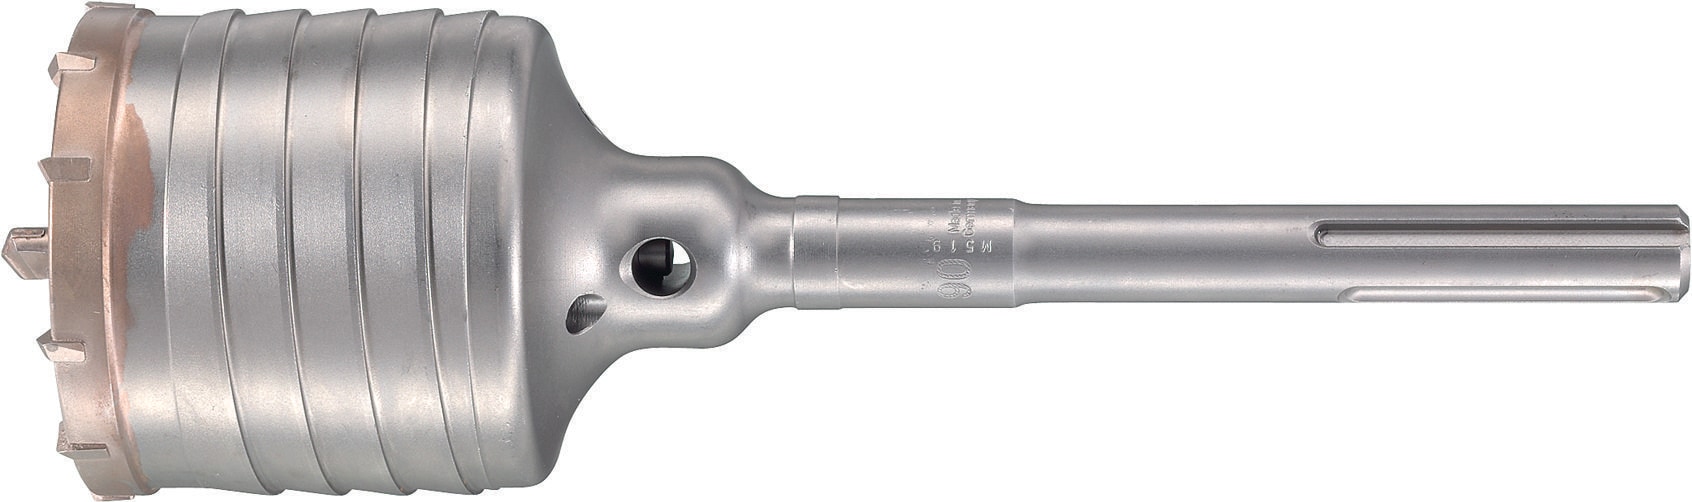 TE-Y-BK SDS Max Rotary hammer core bit - Concrete and masonry